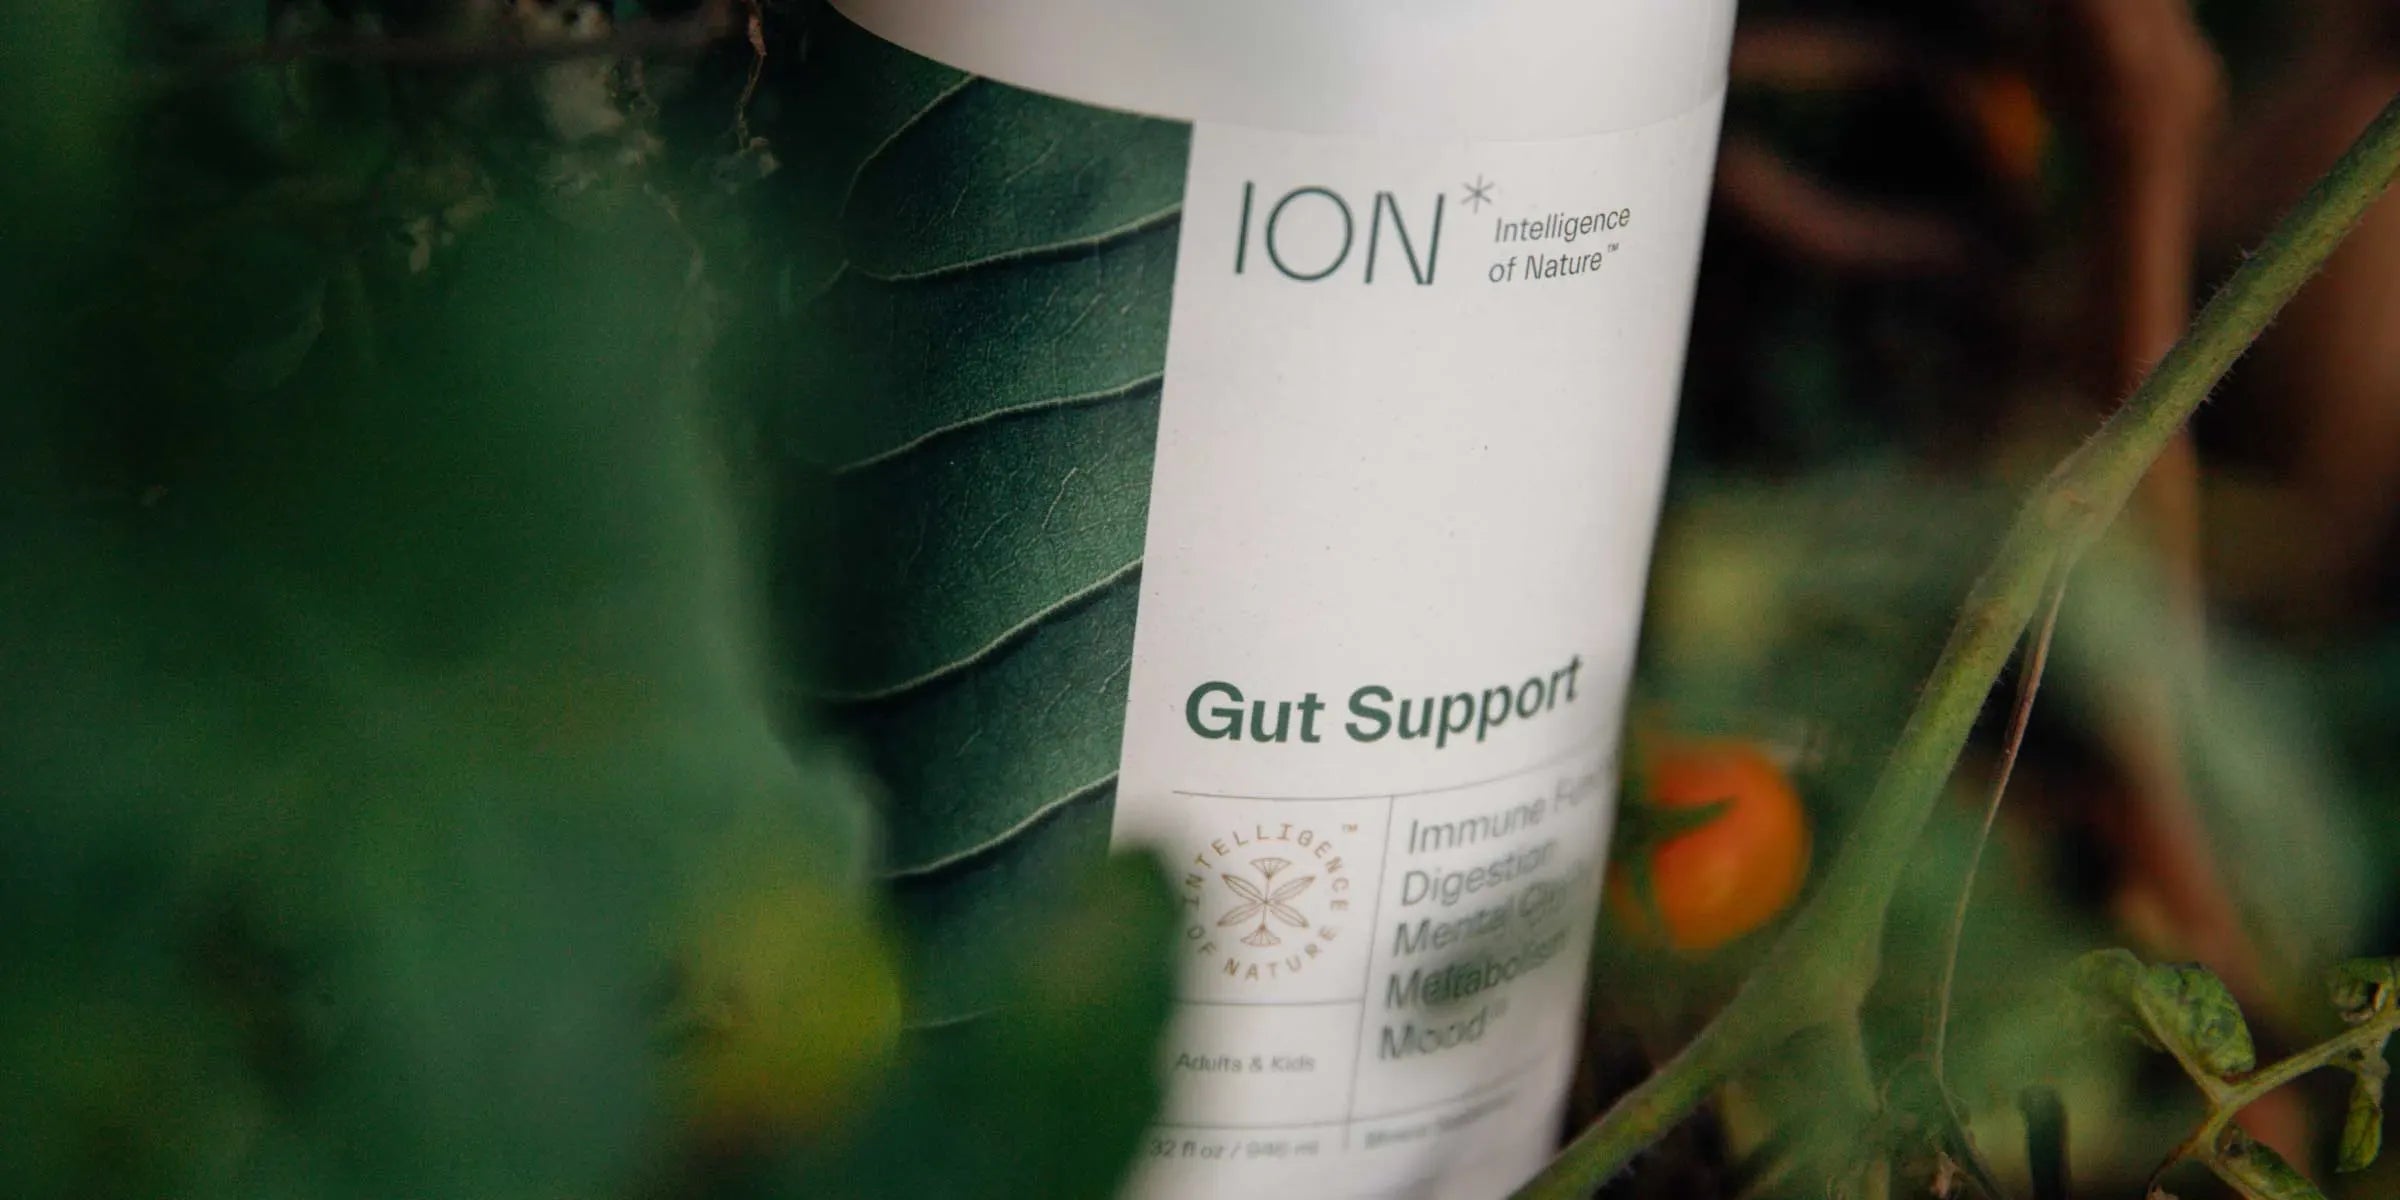 ION Gut Support Bottle